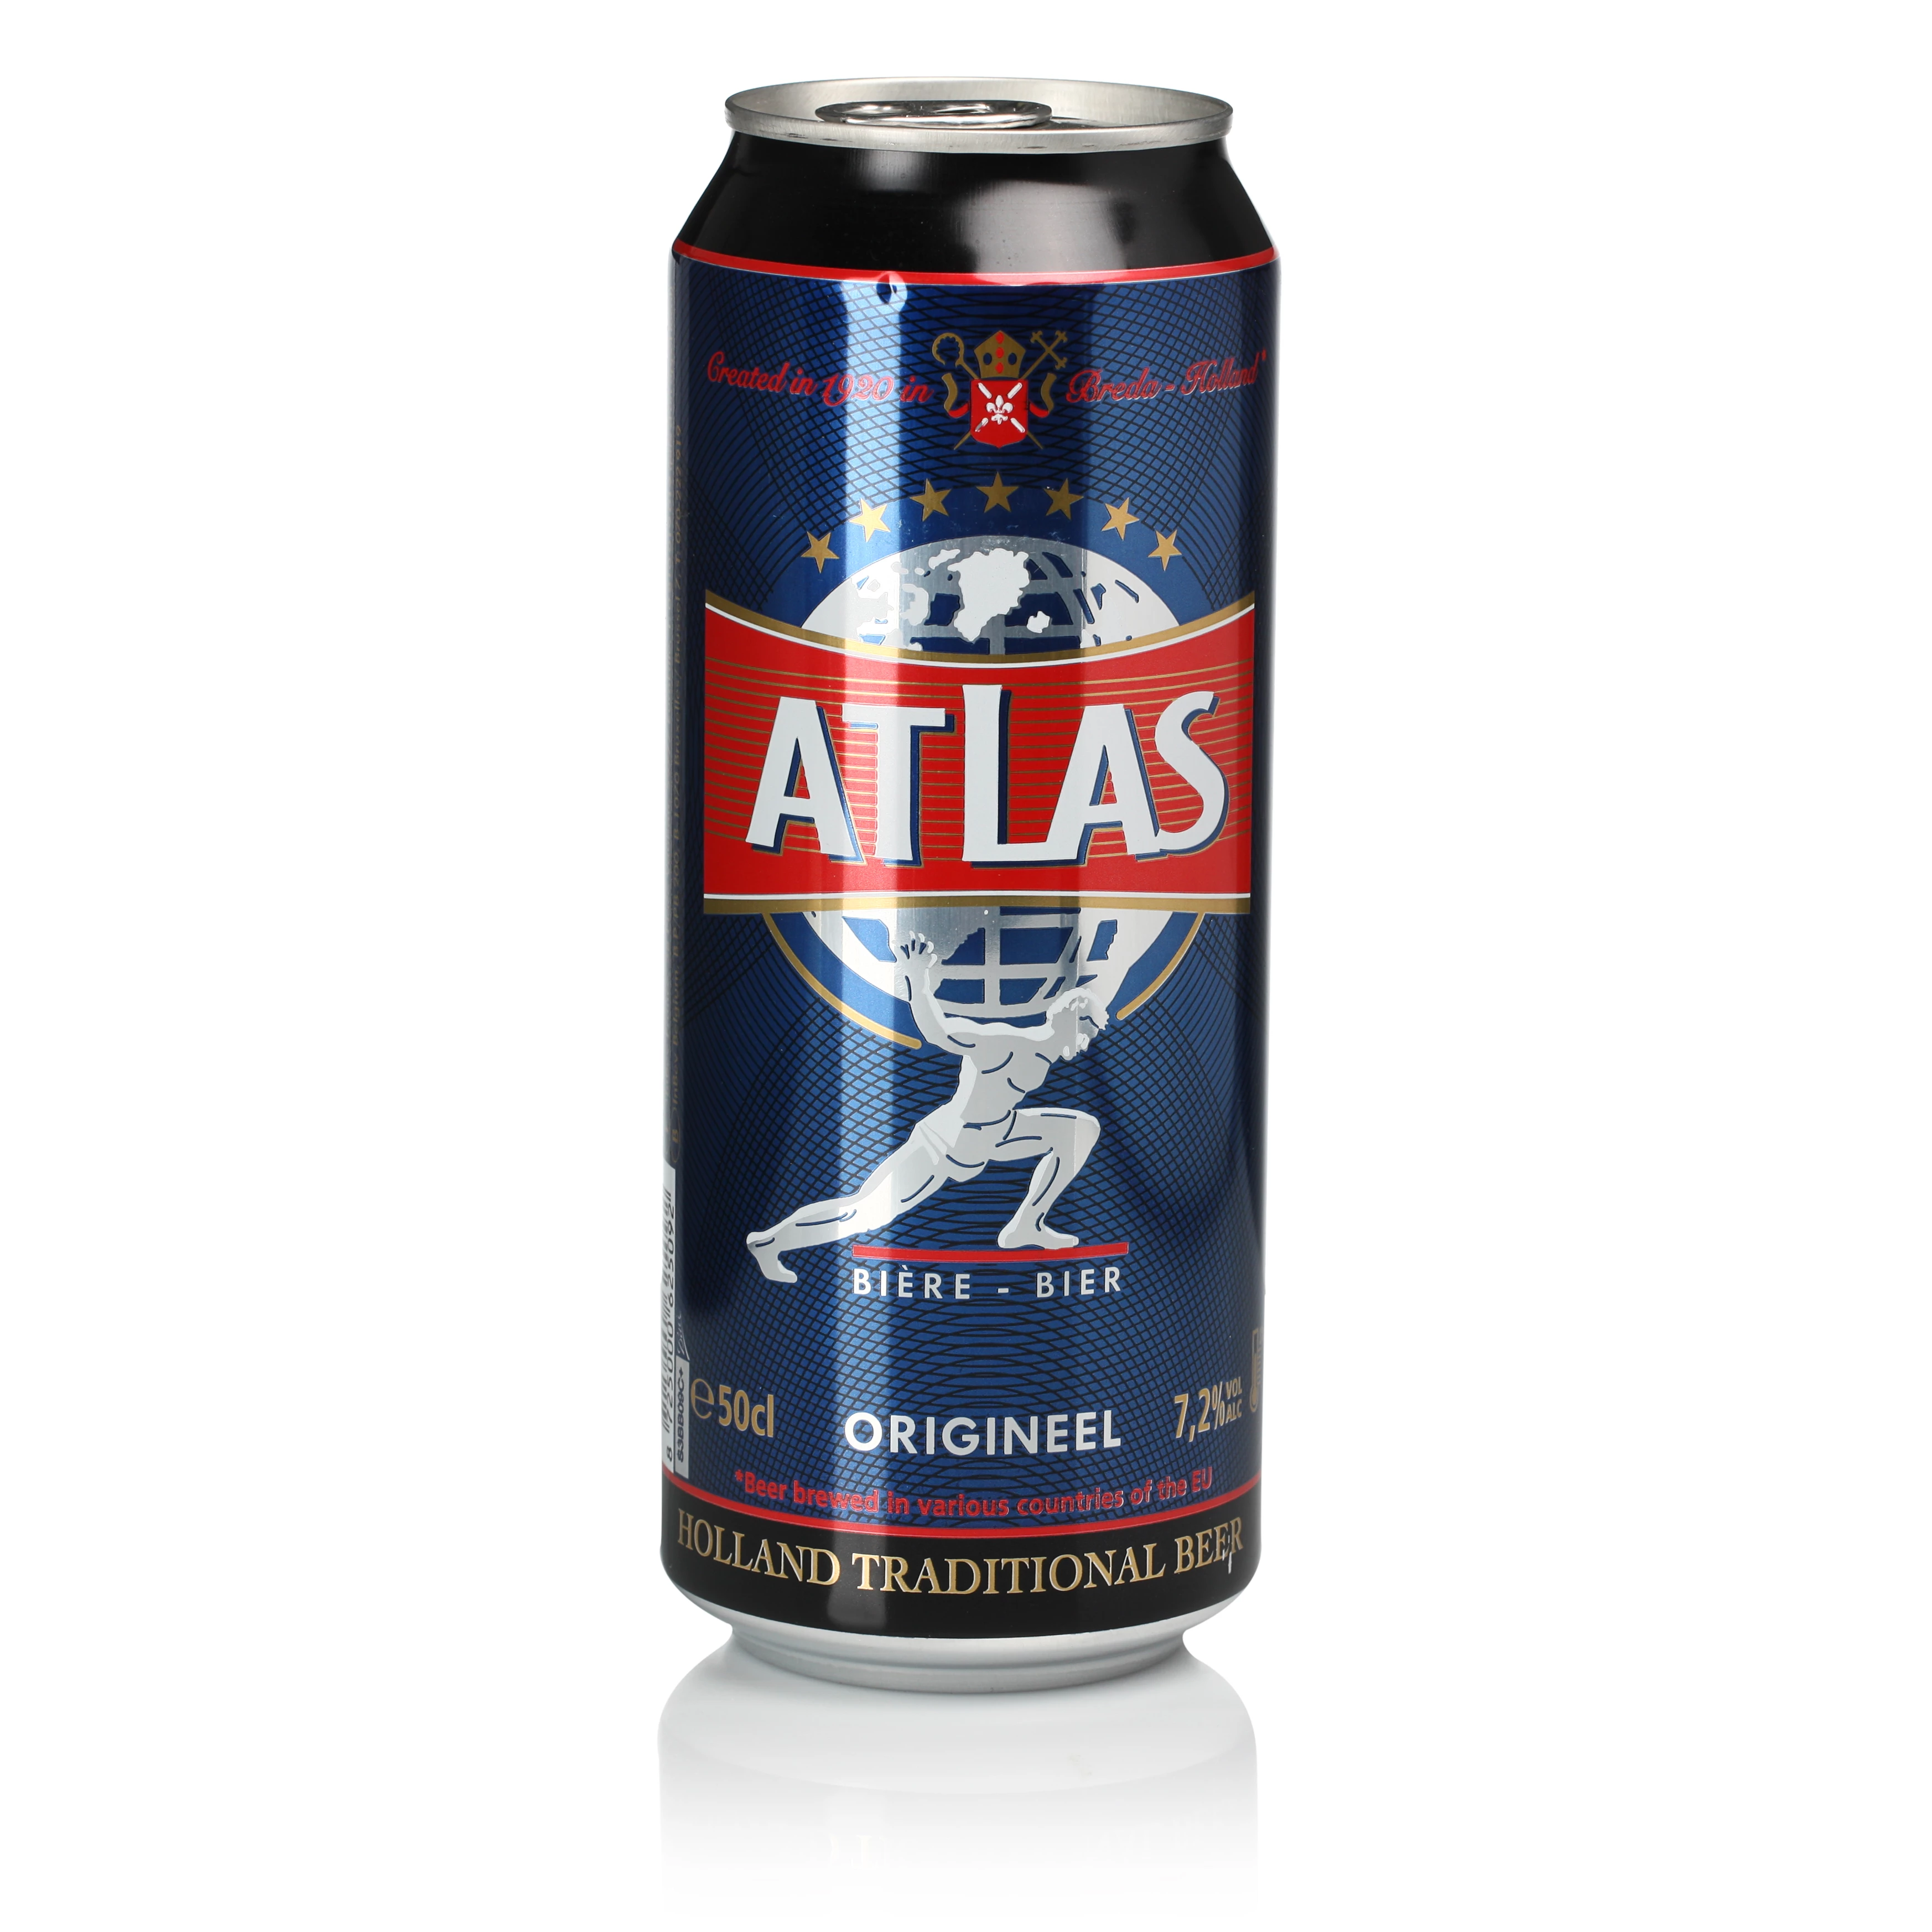 Helles Bier, 7,2°, 12x50cl - ATLAS